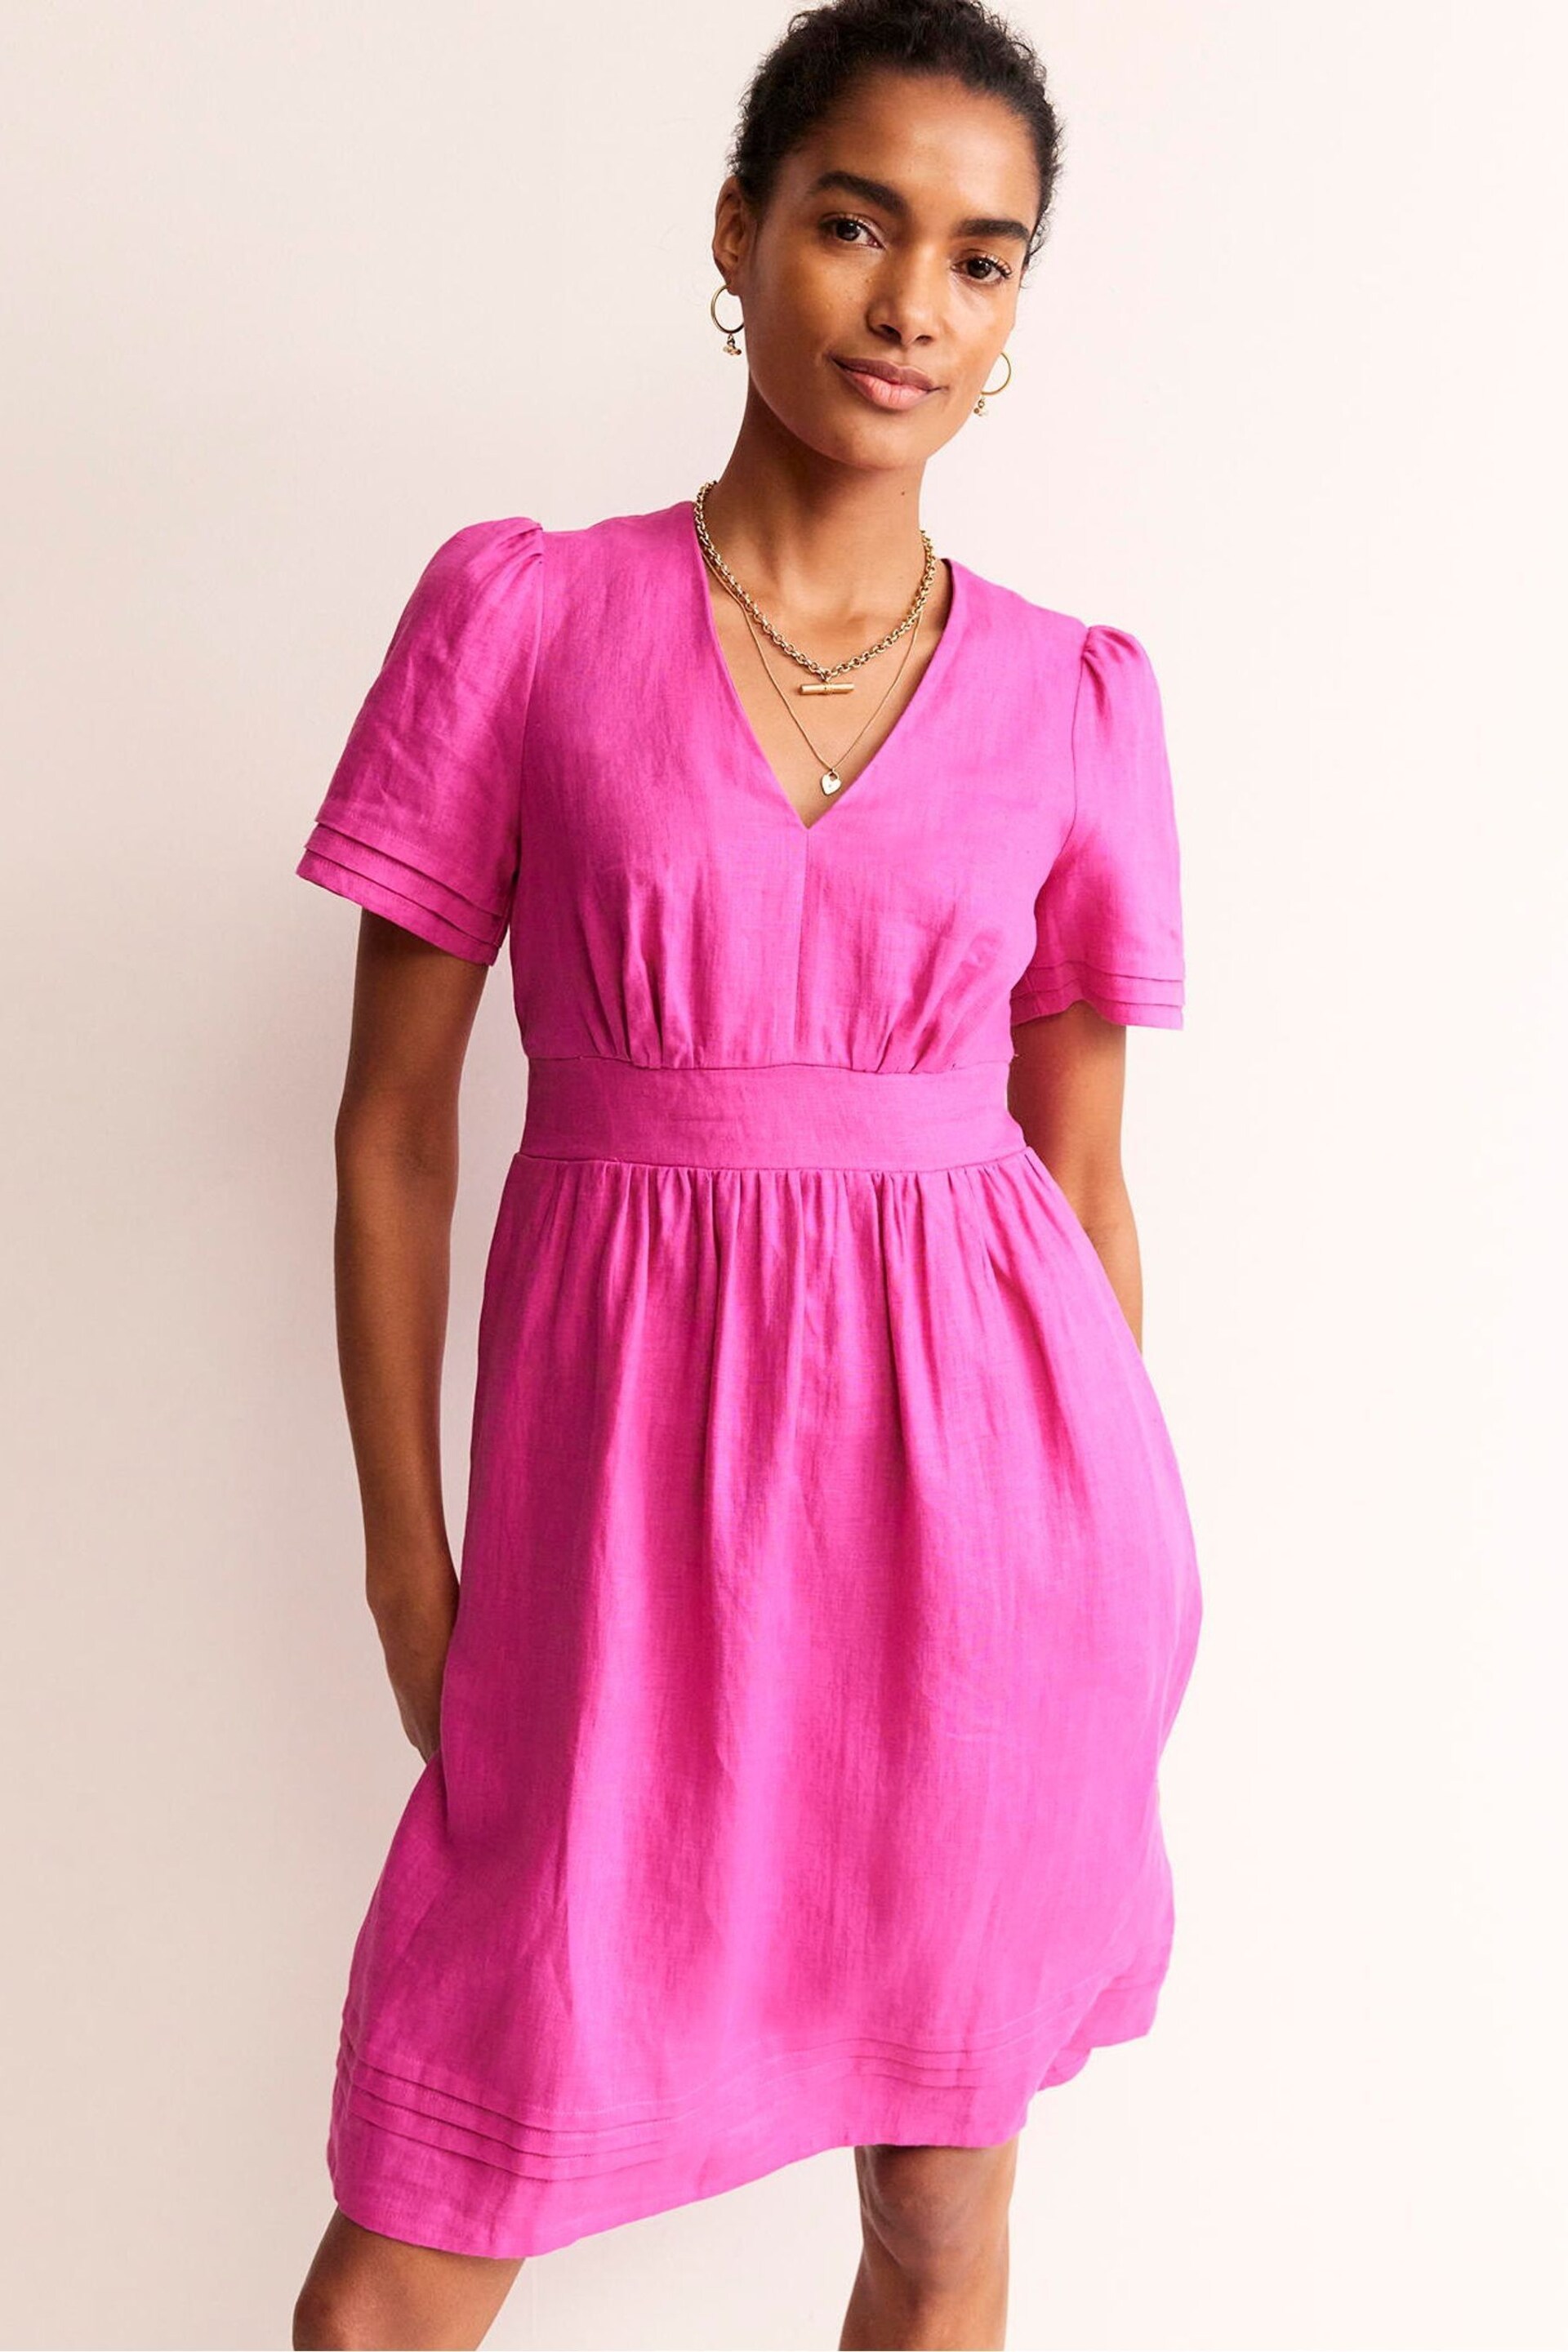 Boden Pink Petite Eve Linen Short Dress - Image 1 of 4